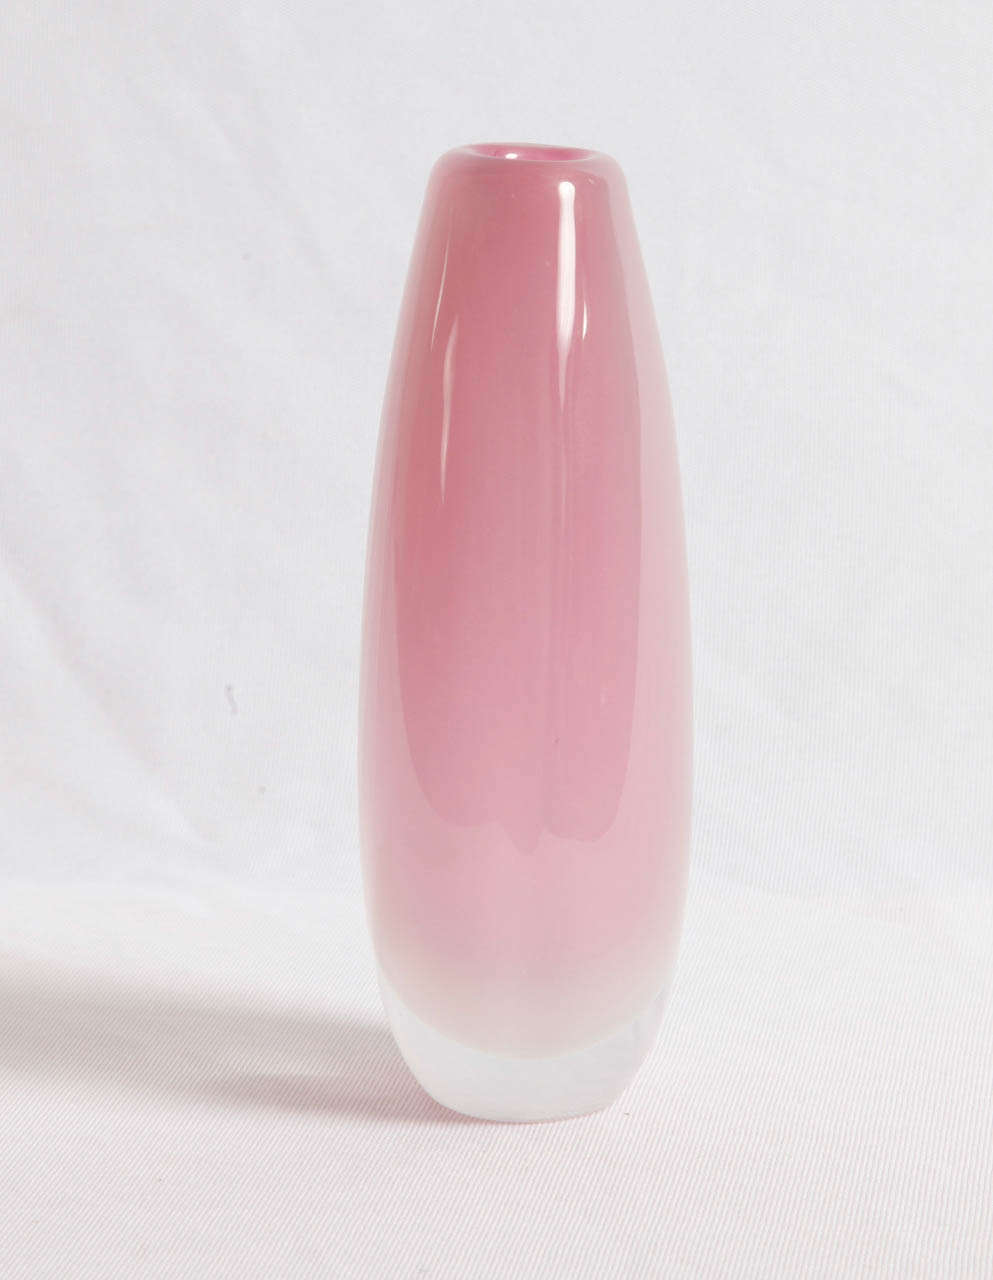 Blown Glass Archimede SEGUSO, 'Alabastro' Vases For Sale